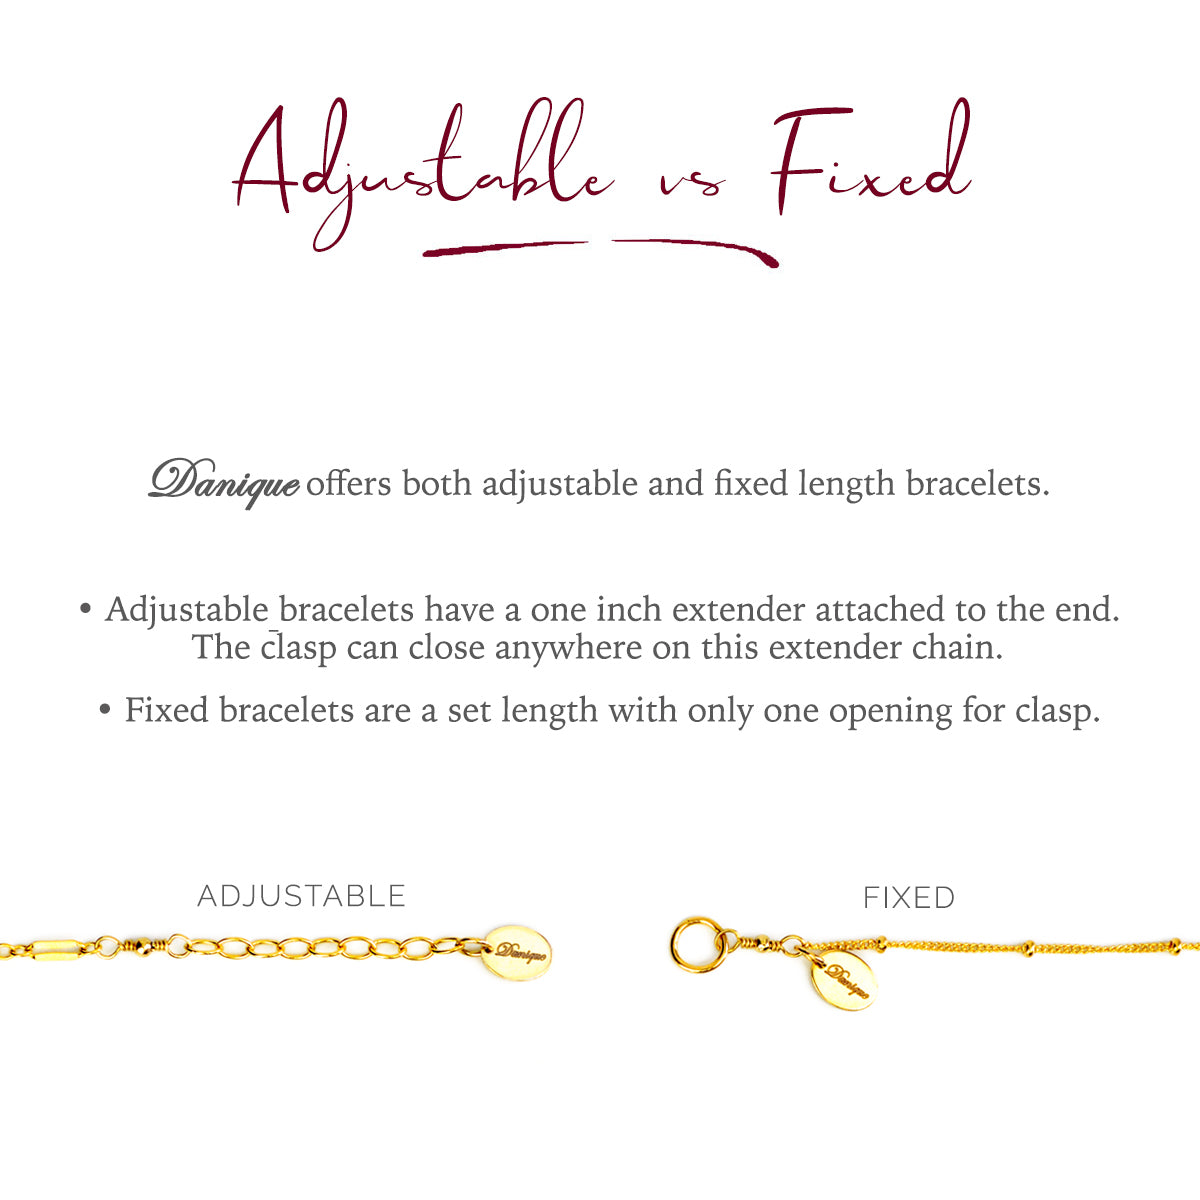 14K Gold Filled Chain Bracelet 14K Gold Filled Chain Bracelet - 7 | 1-800-Flowers Occasions Delivery